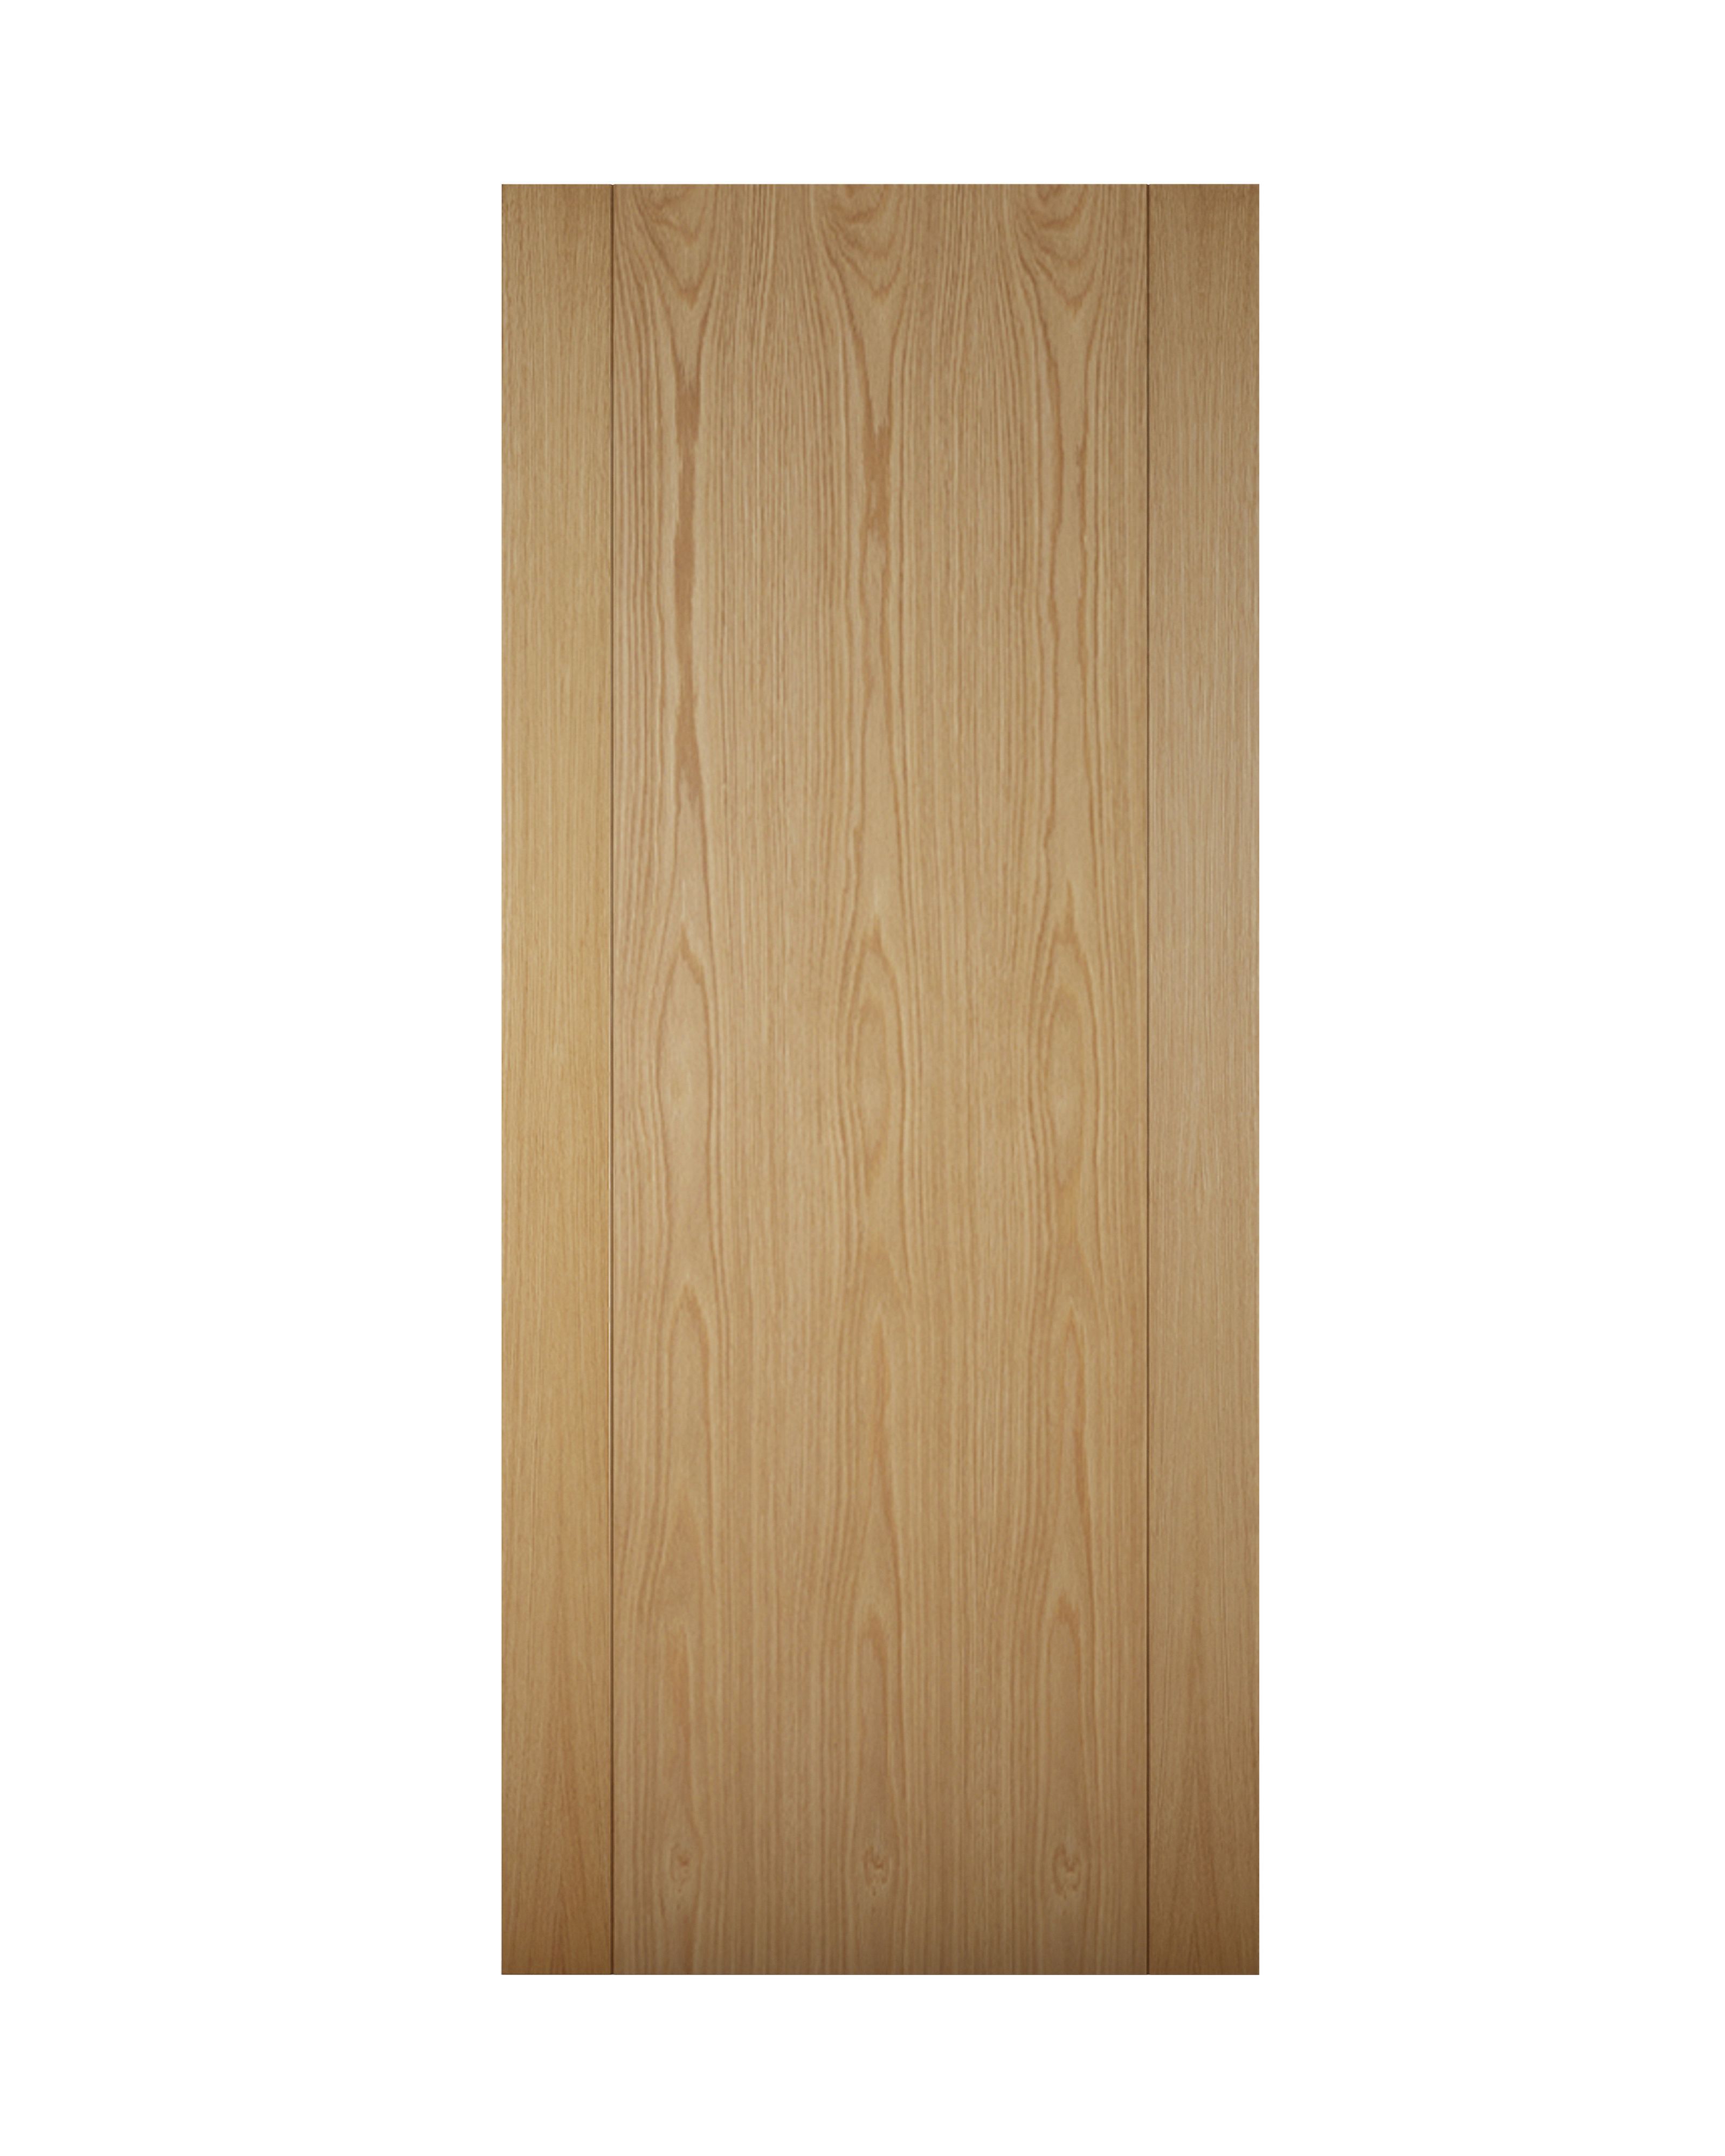 Veneered White oak veneer Front door & frame, (H)2074mm (W)856mm